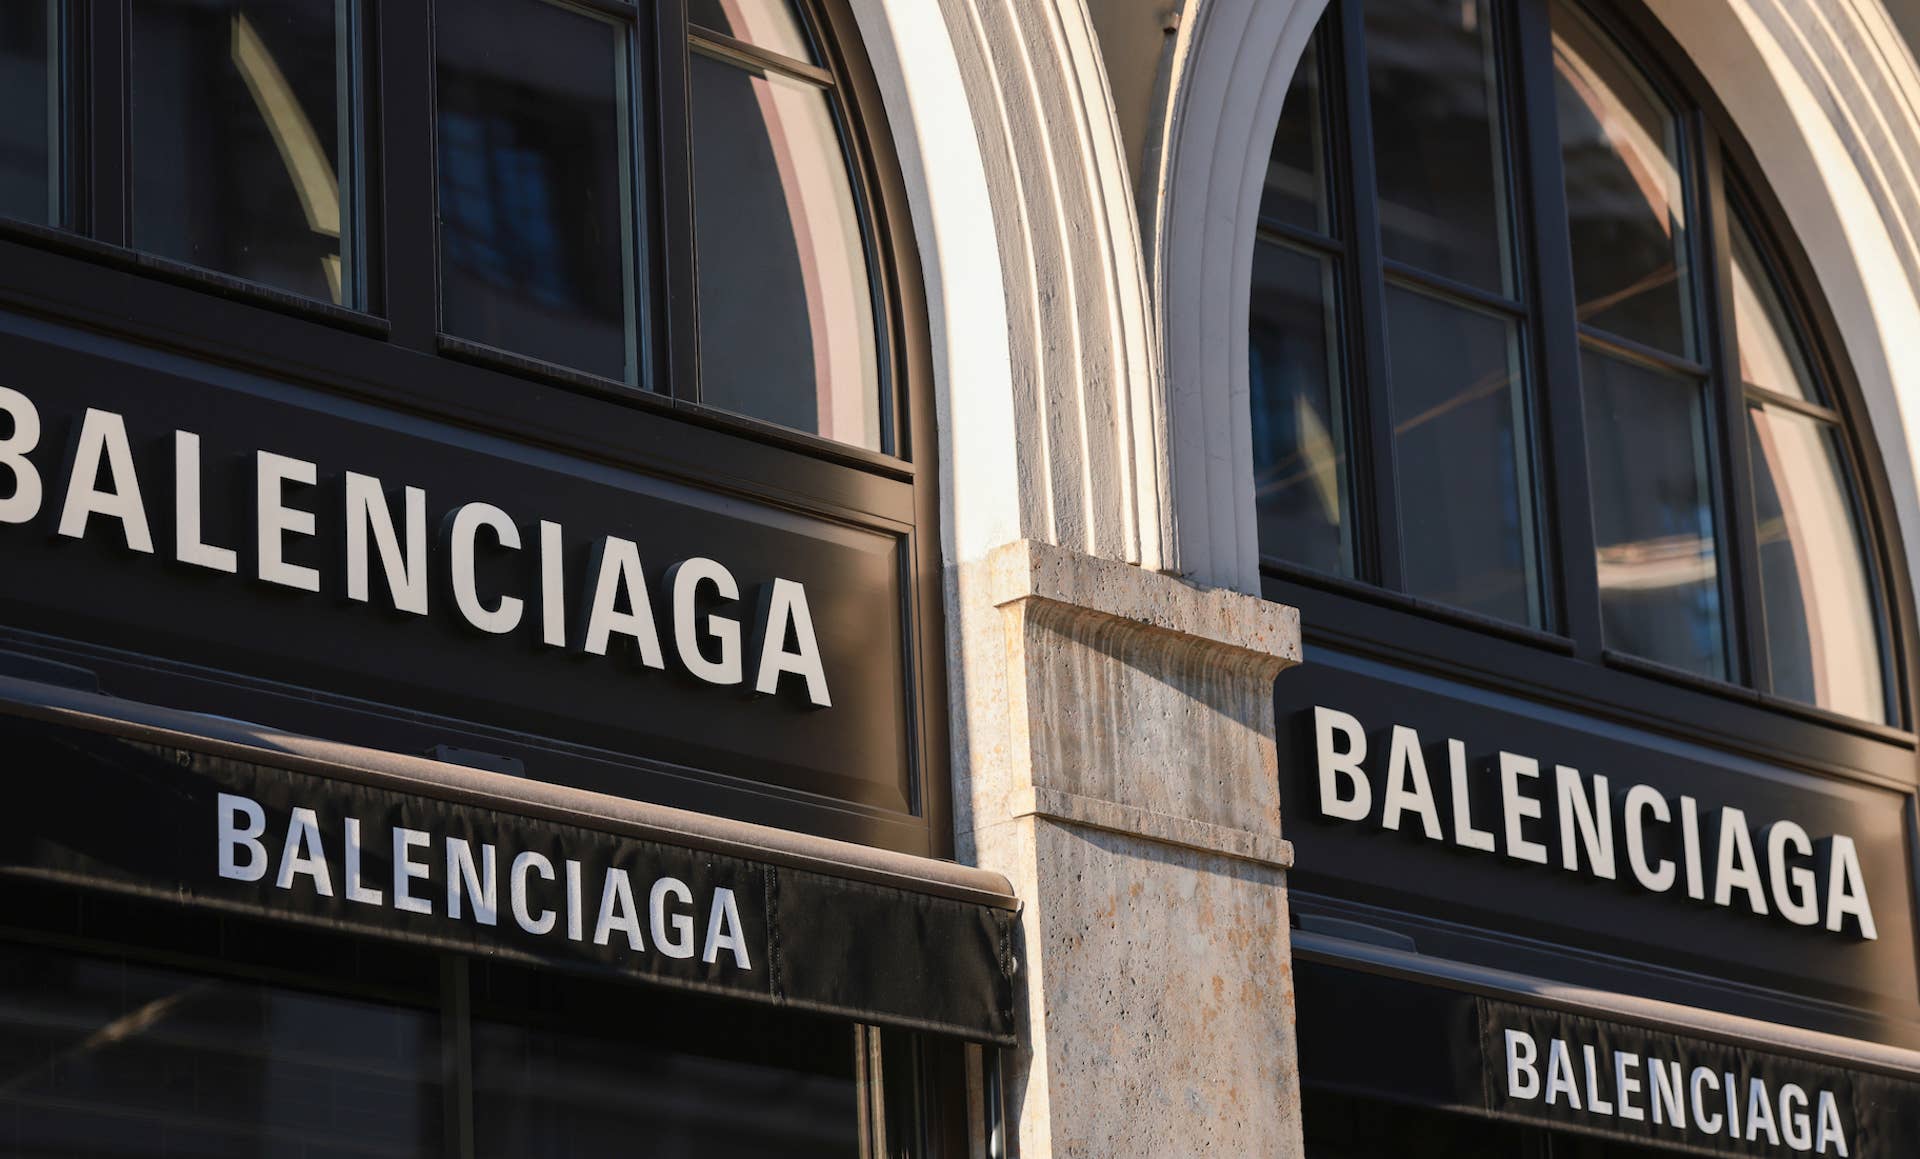 A Balenciaga storefront in Munich, Germany